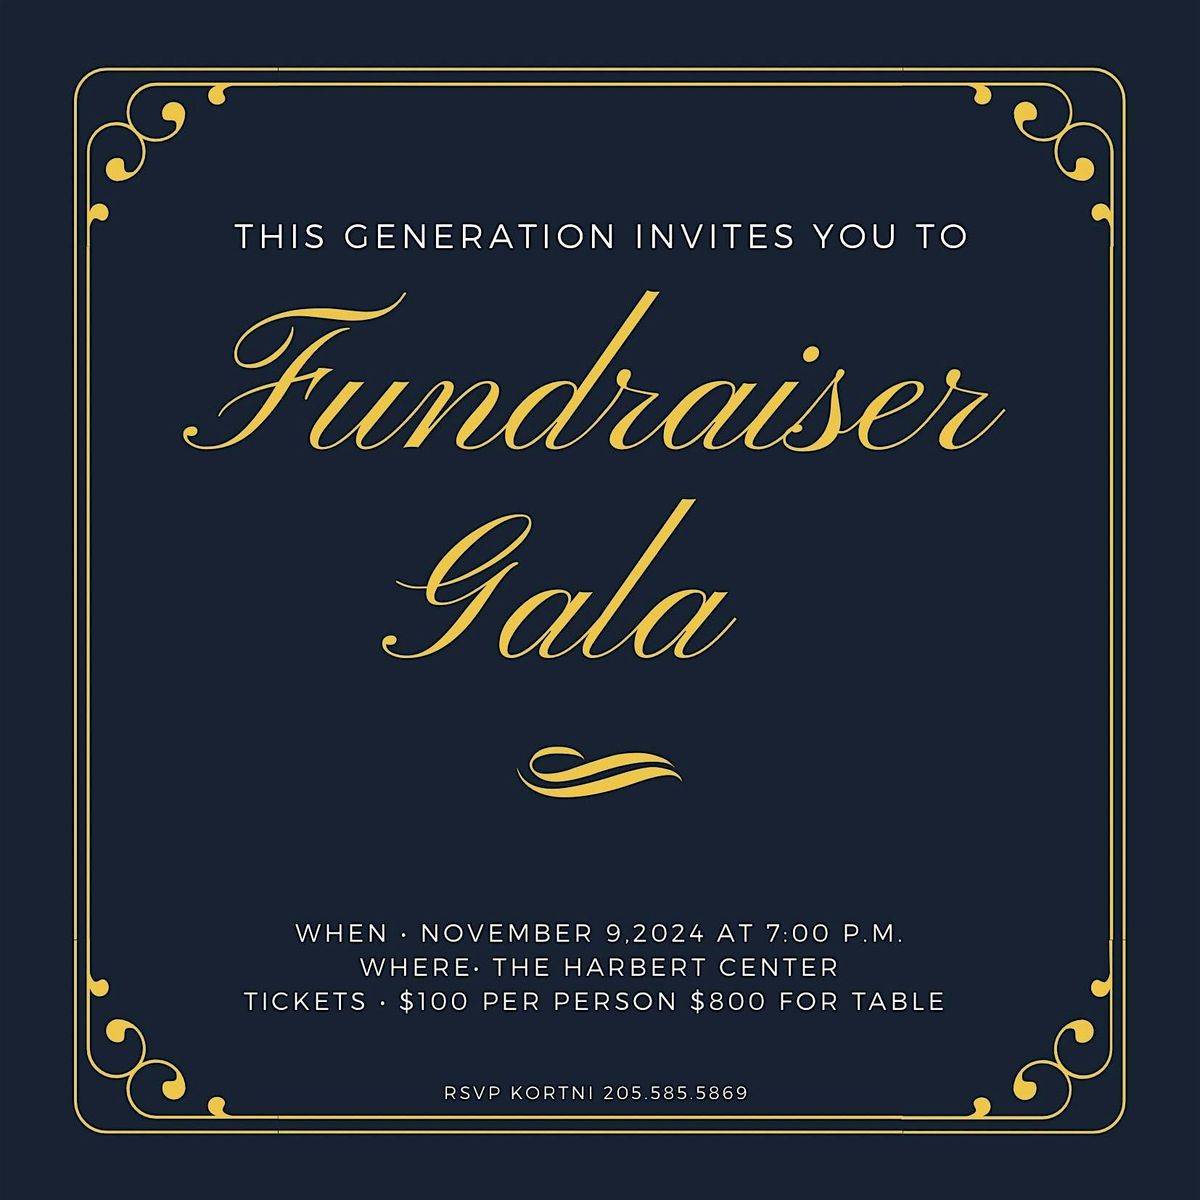 This Generation's Fundraiser Gala 2024